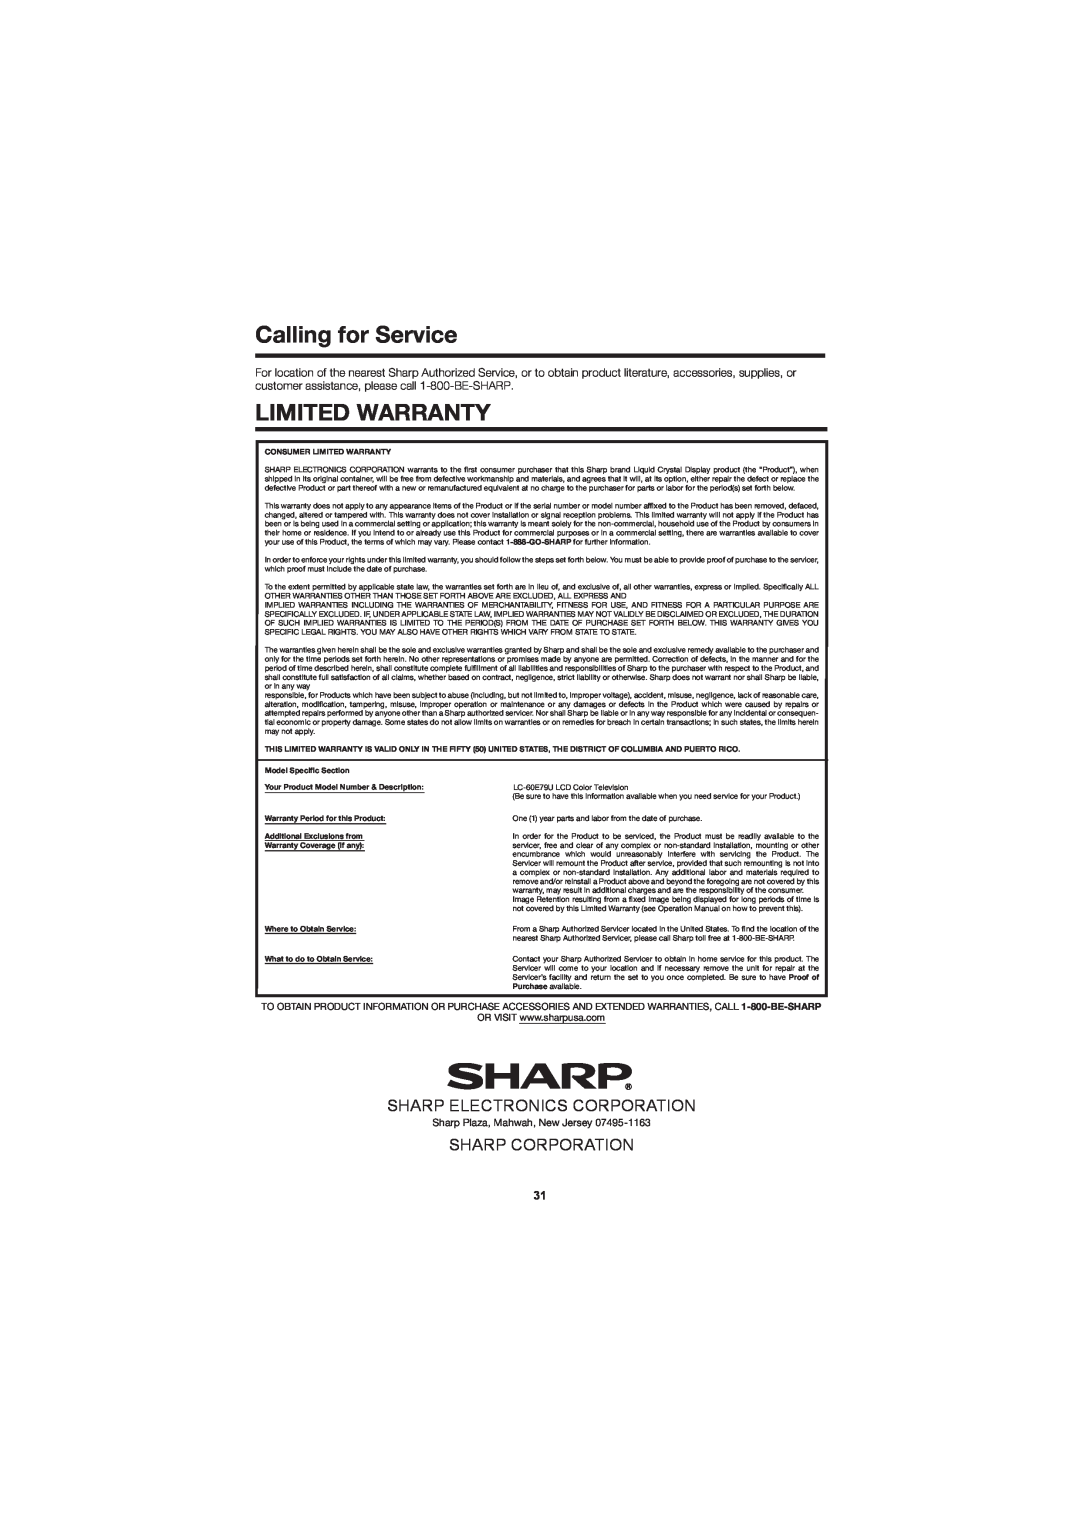 Sharp LC-60E79U operation manual Calling for Service, Limited Warranty, Sharp Electronics Corporation, Sharp Corporation 